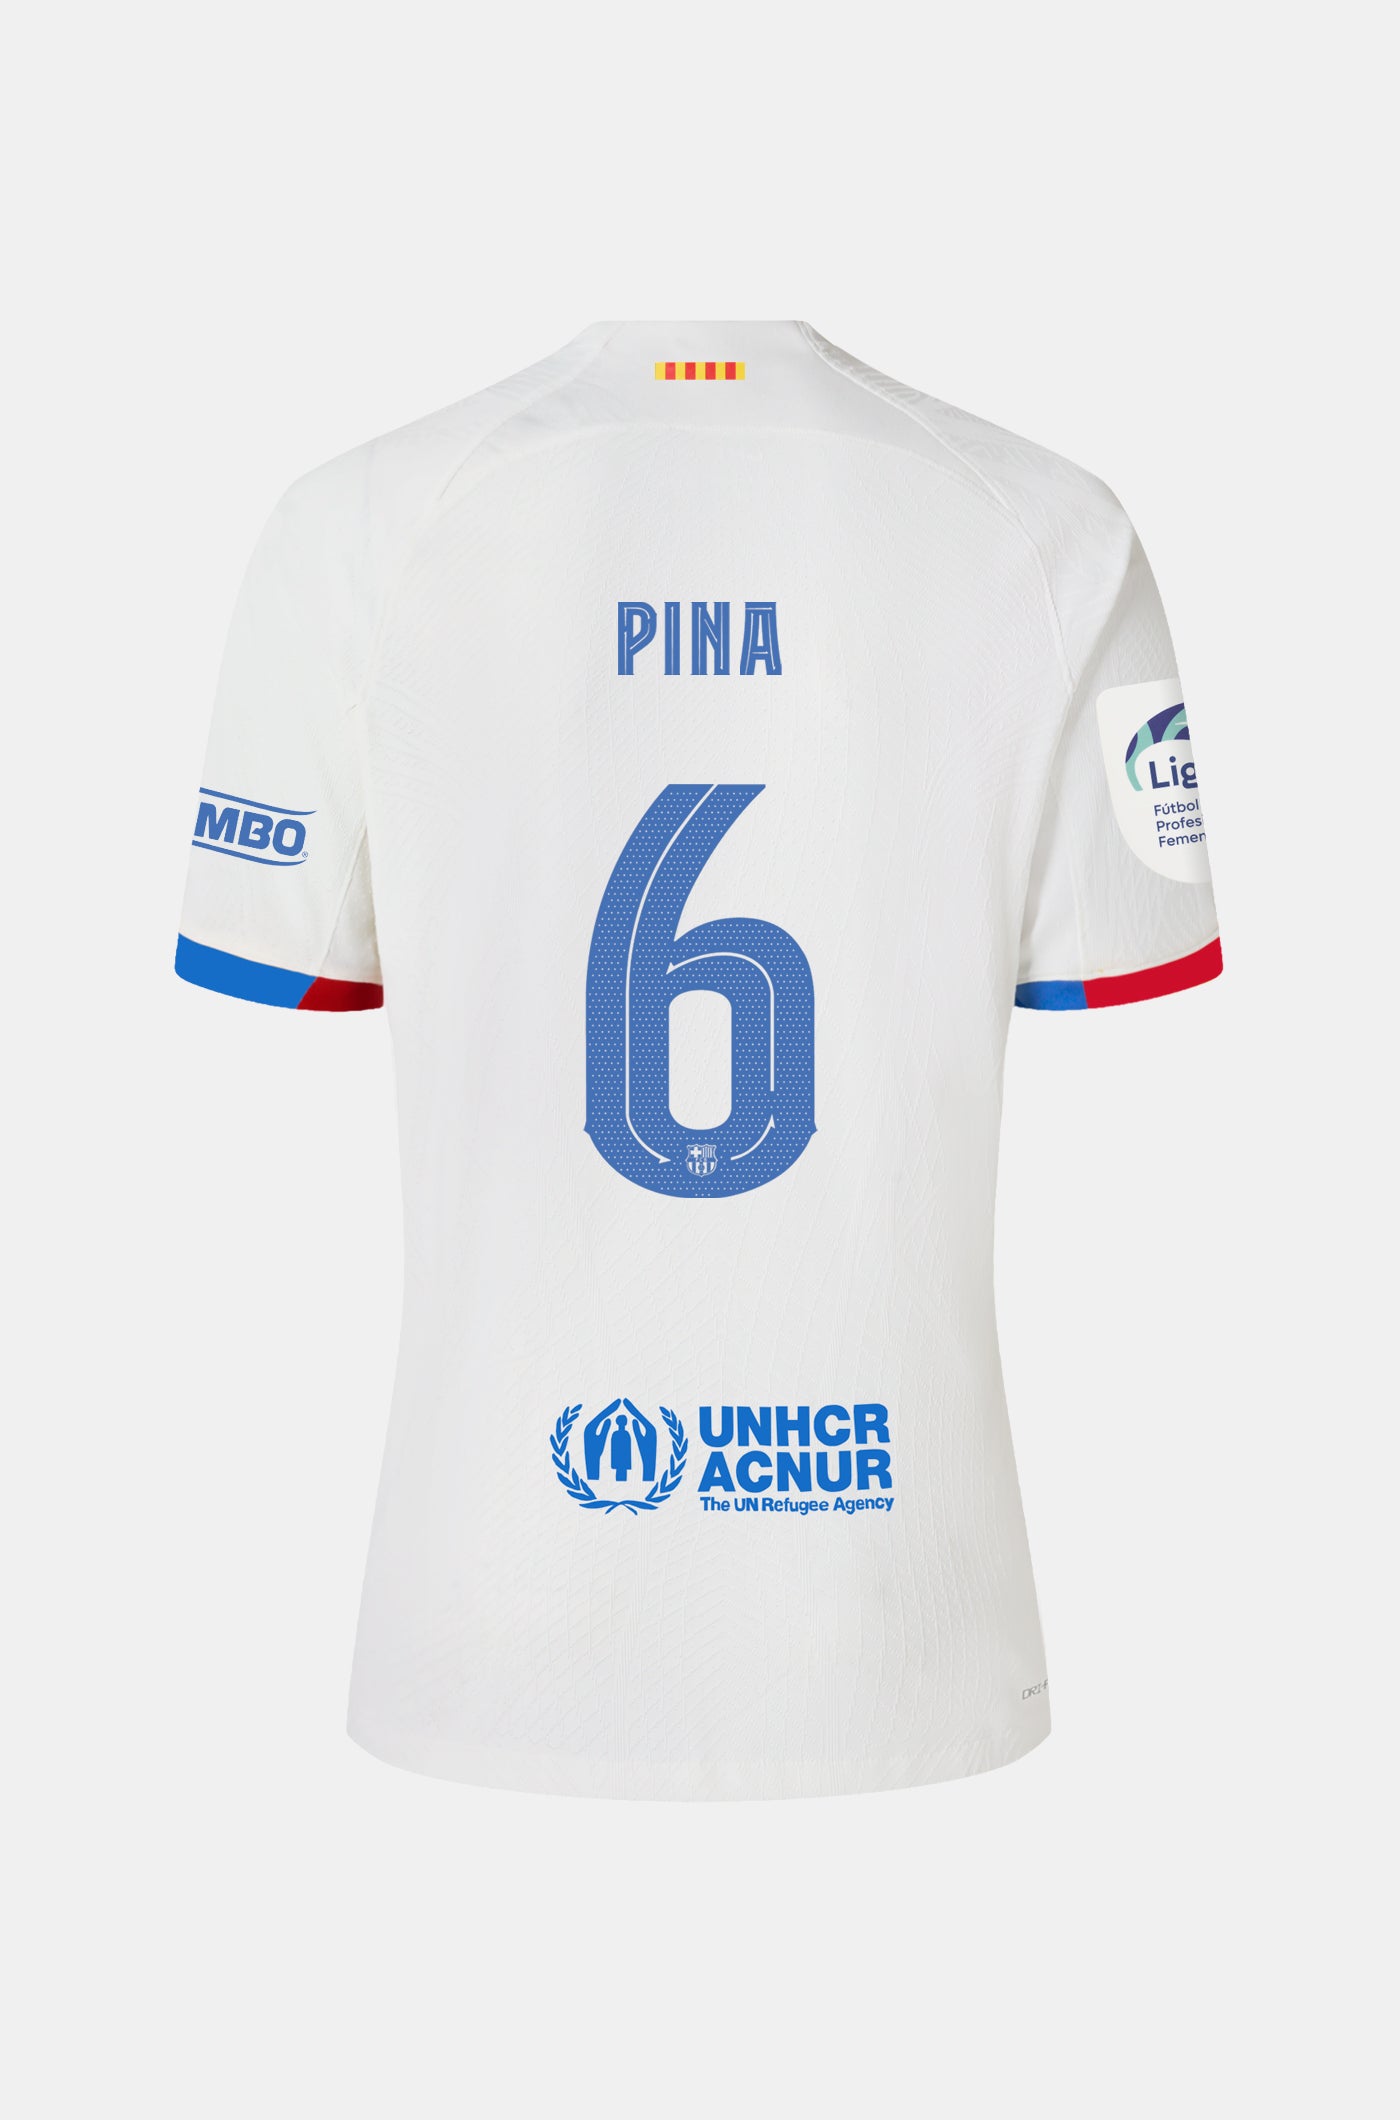 Liga F FC Barcelona away shirt 23/24 - Women  - PINA